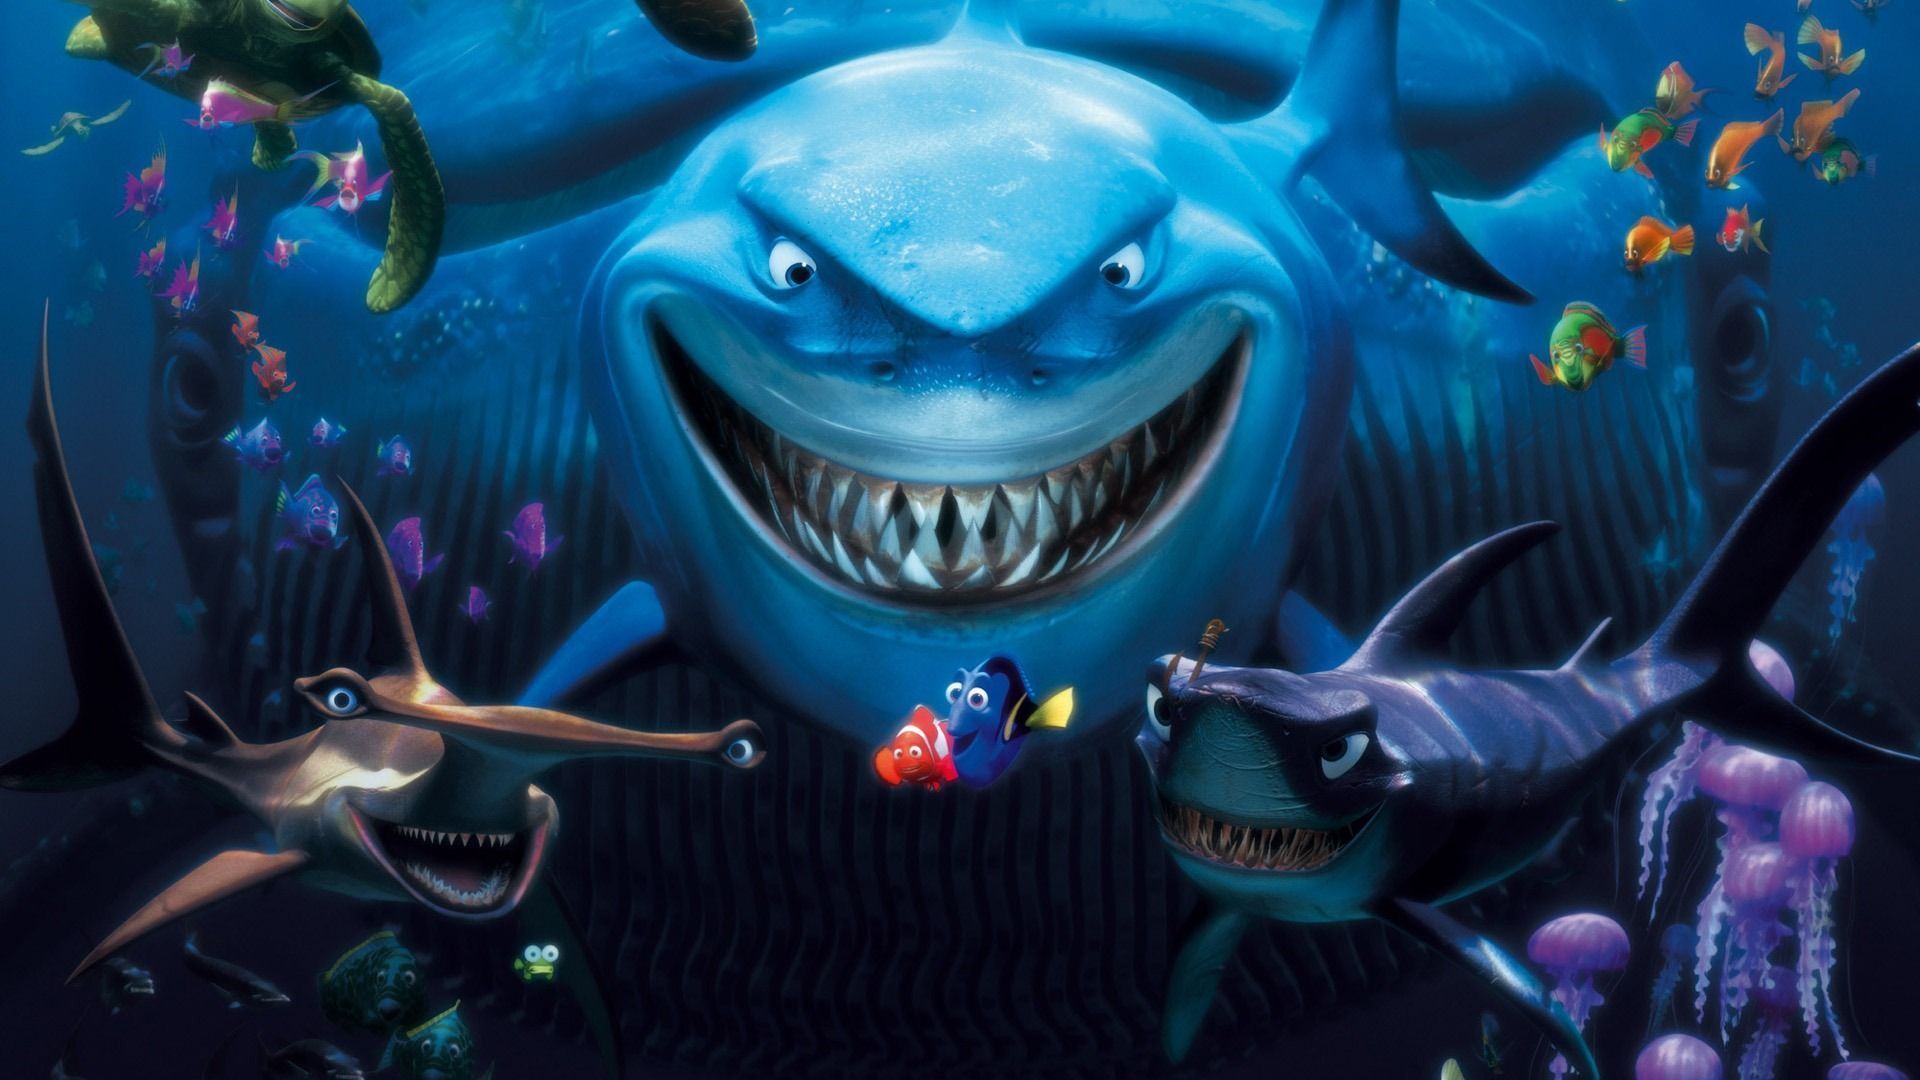 Finding Nemo 3D Movie HD Desktop Wallpaper 03 1920x1080 - 1526807